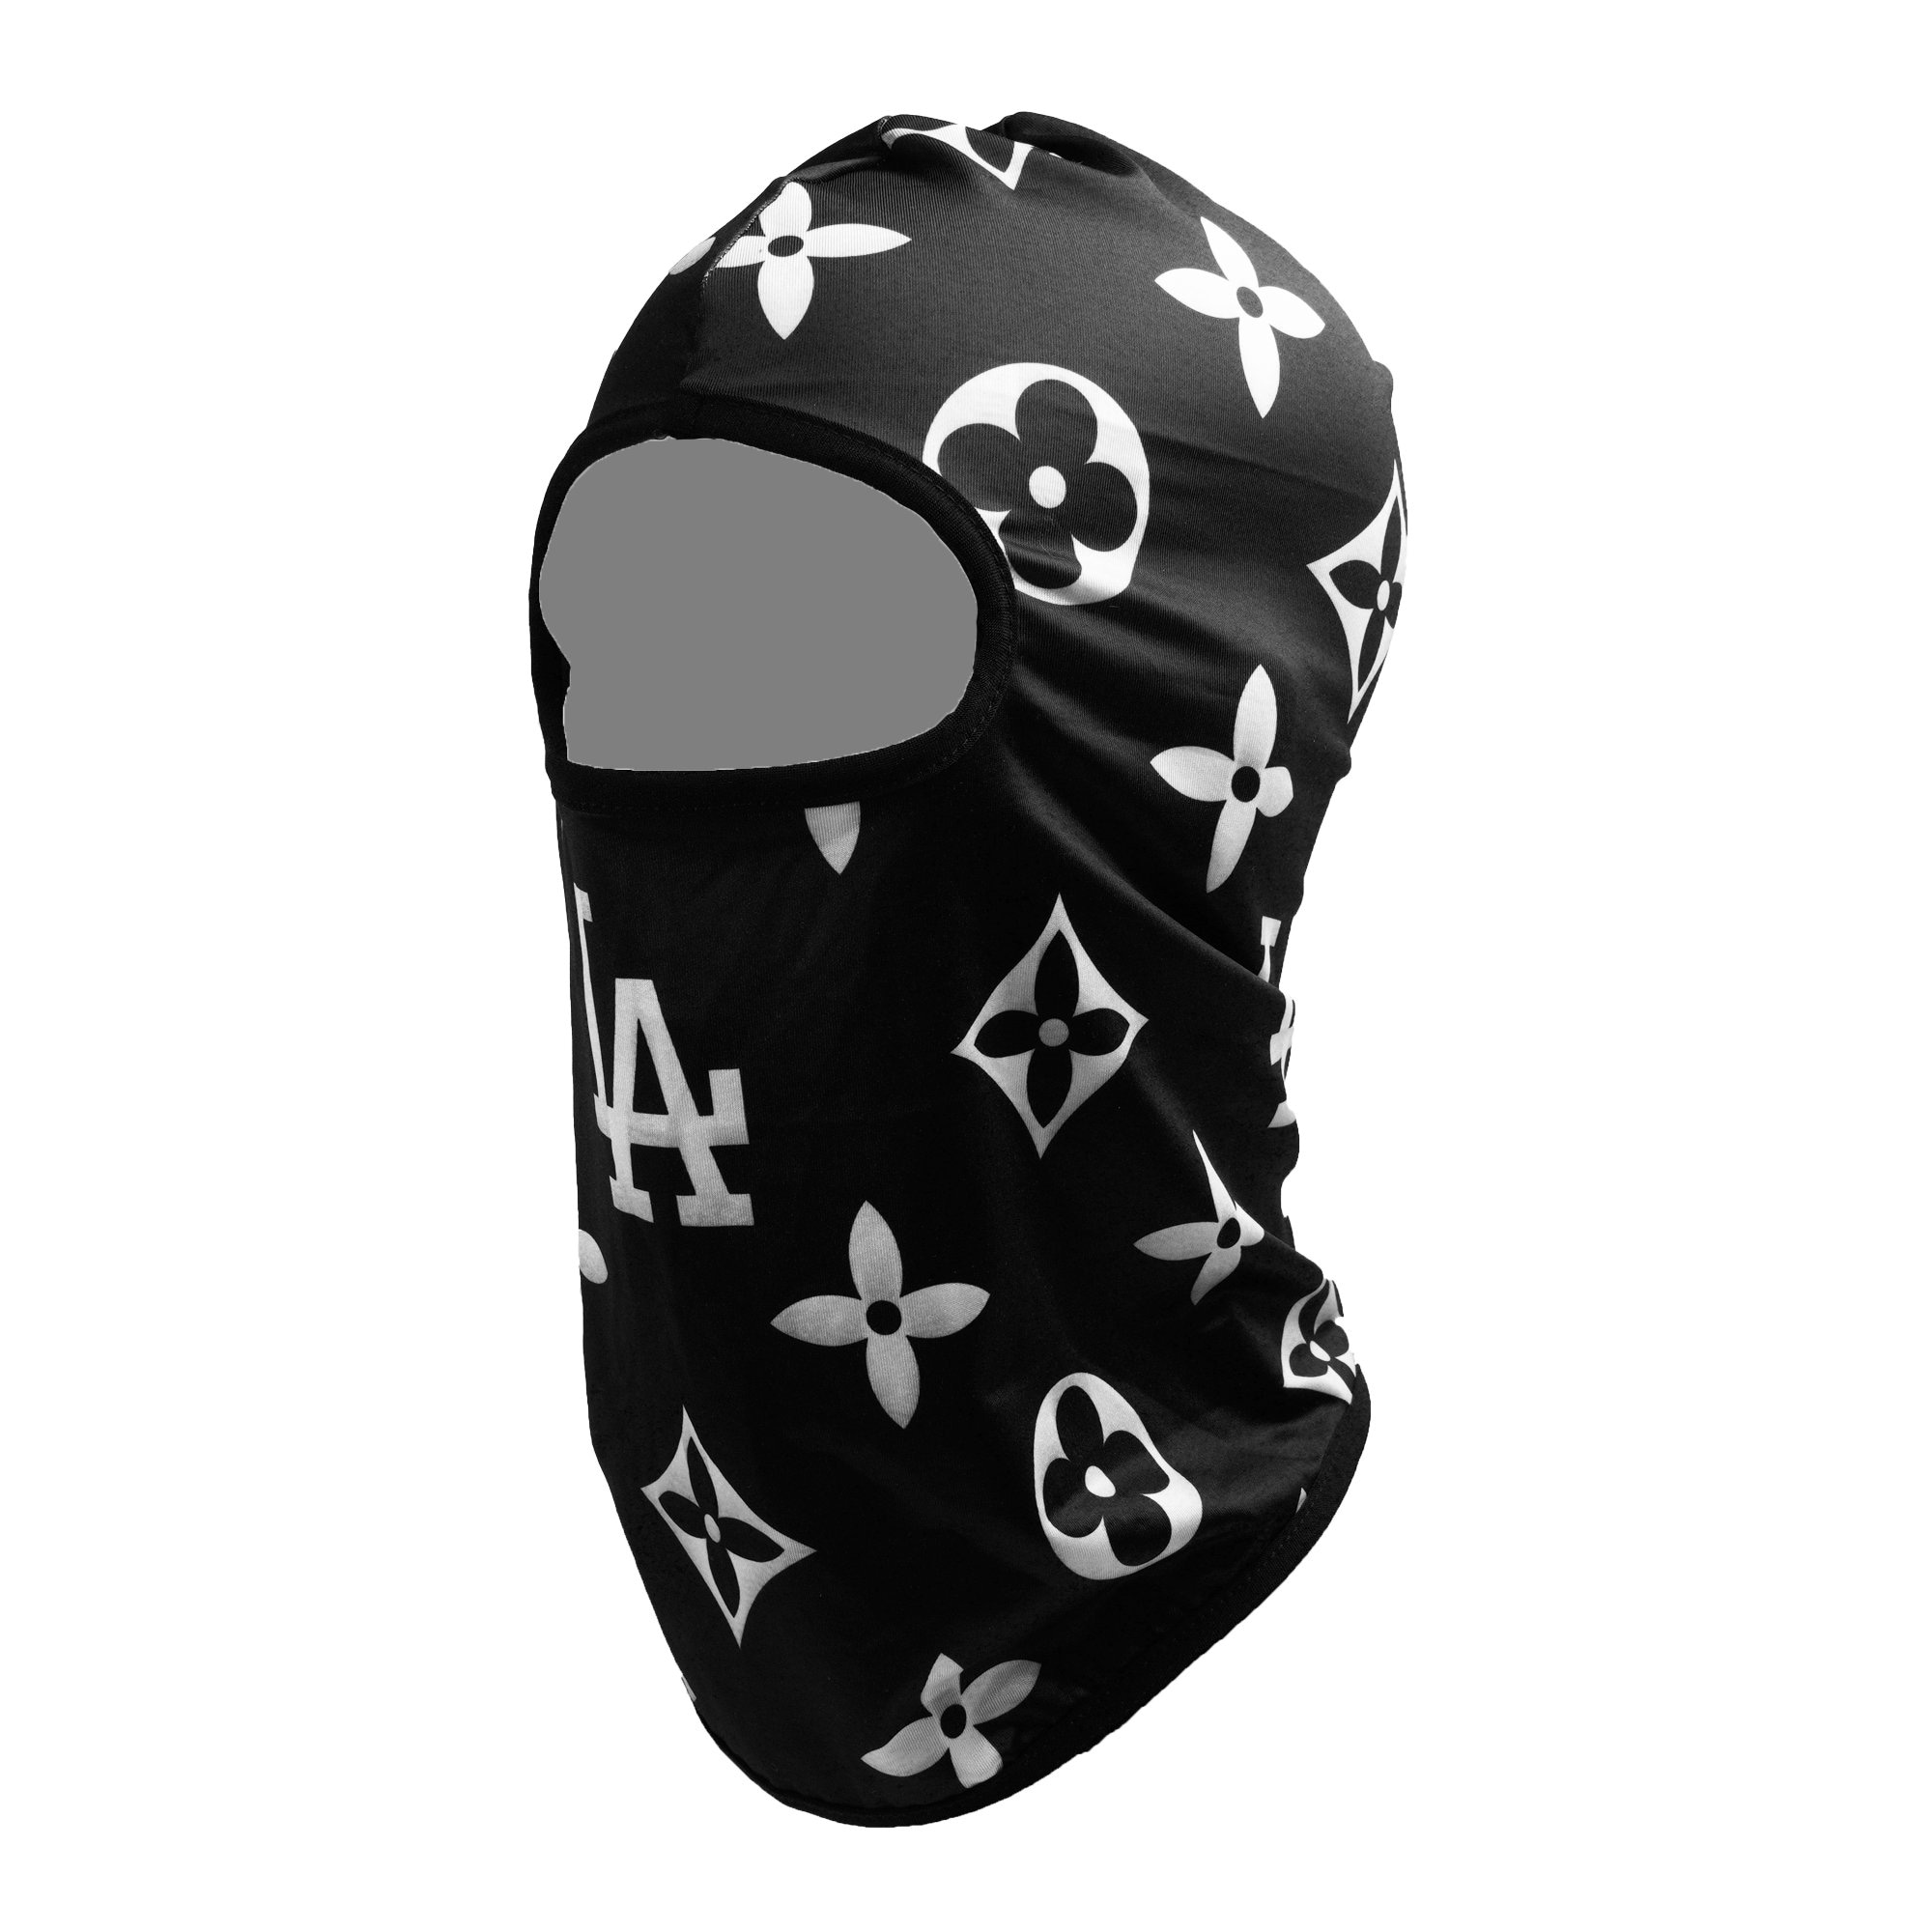 GCBalaclavas La Ski Mask Balaclava Face Mask Hood Cap . Popular Art Gift for Her Him Shiesty